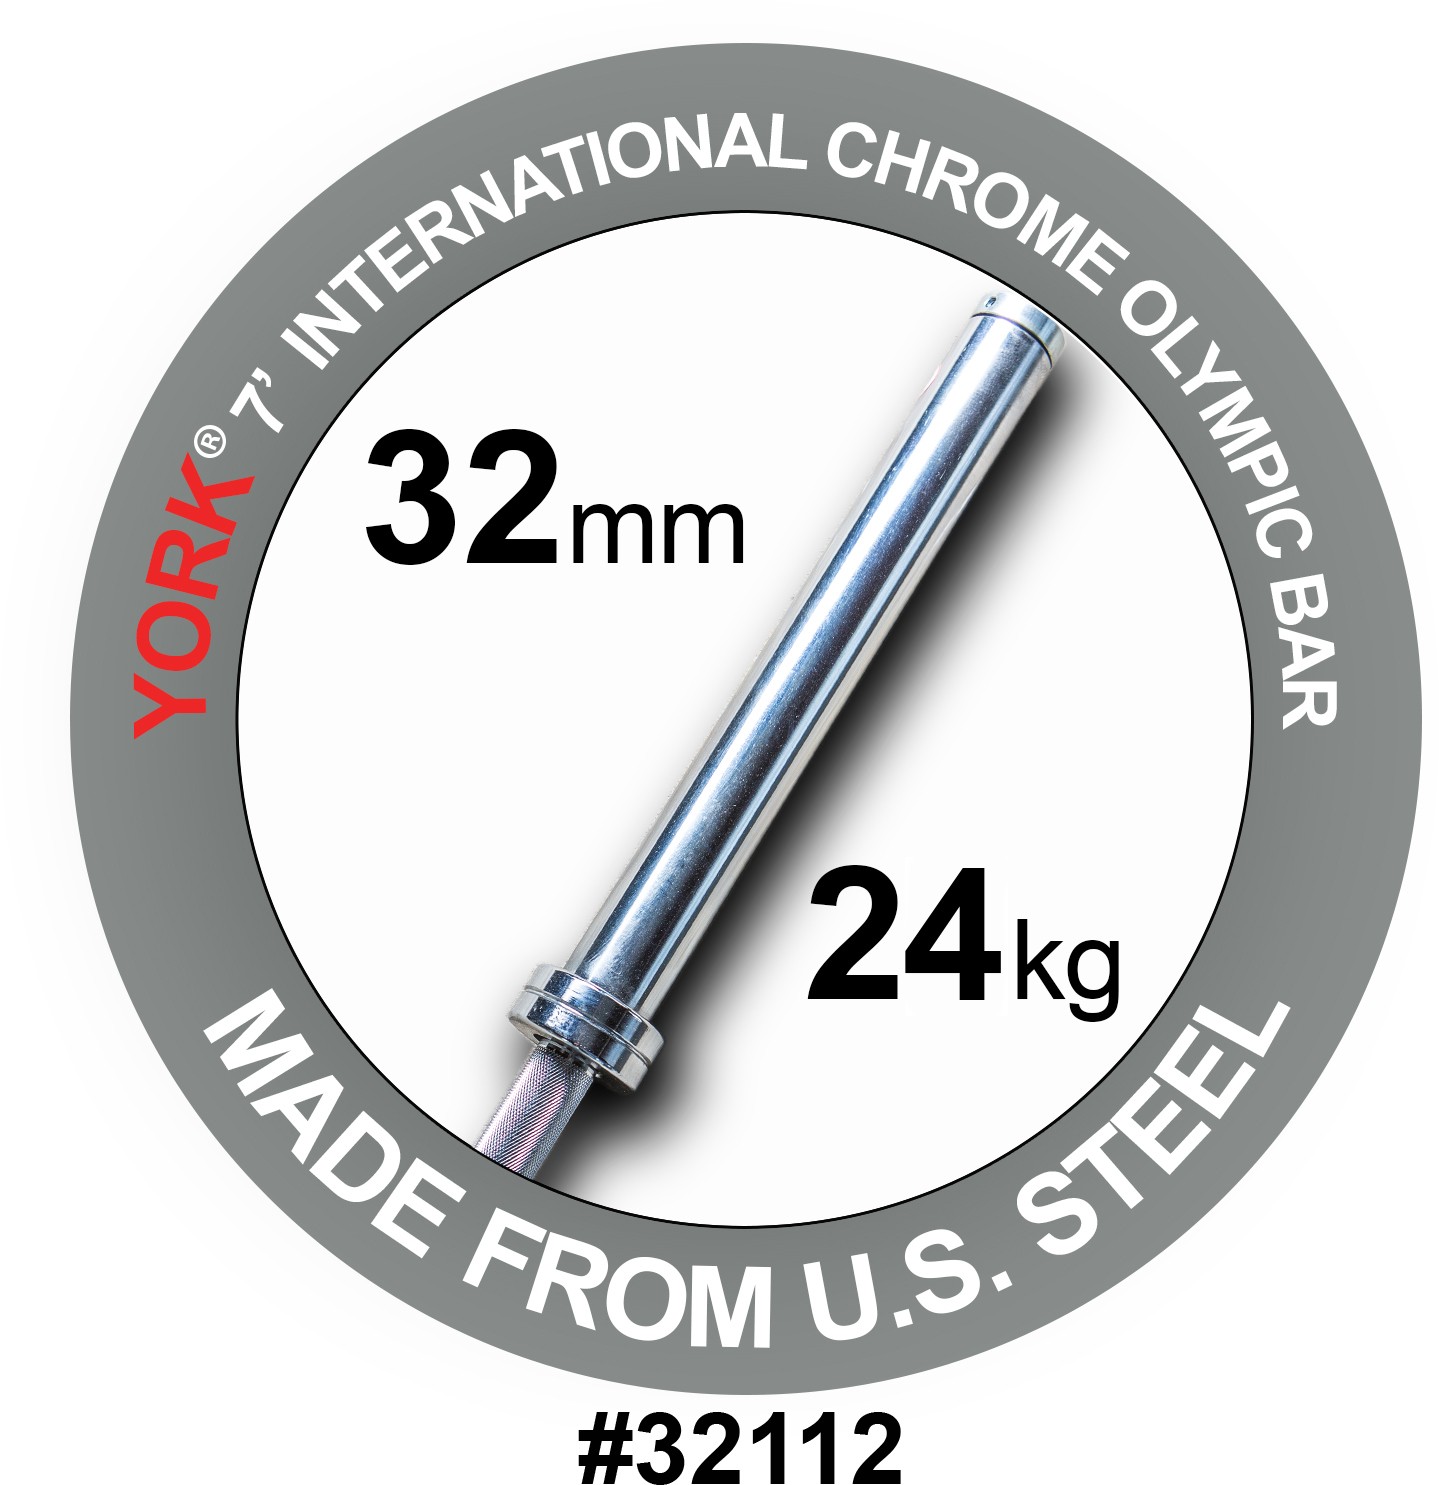 York 7′ International Chrome Olympic Bar – 32mm (New)